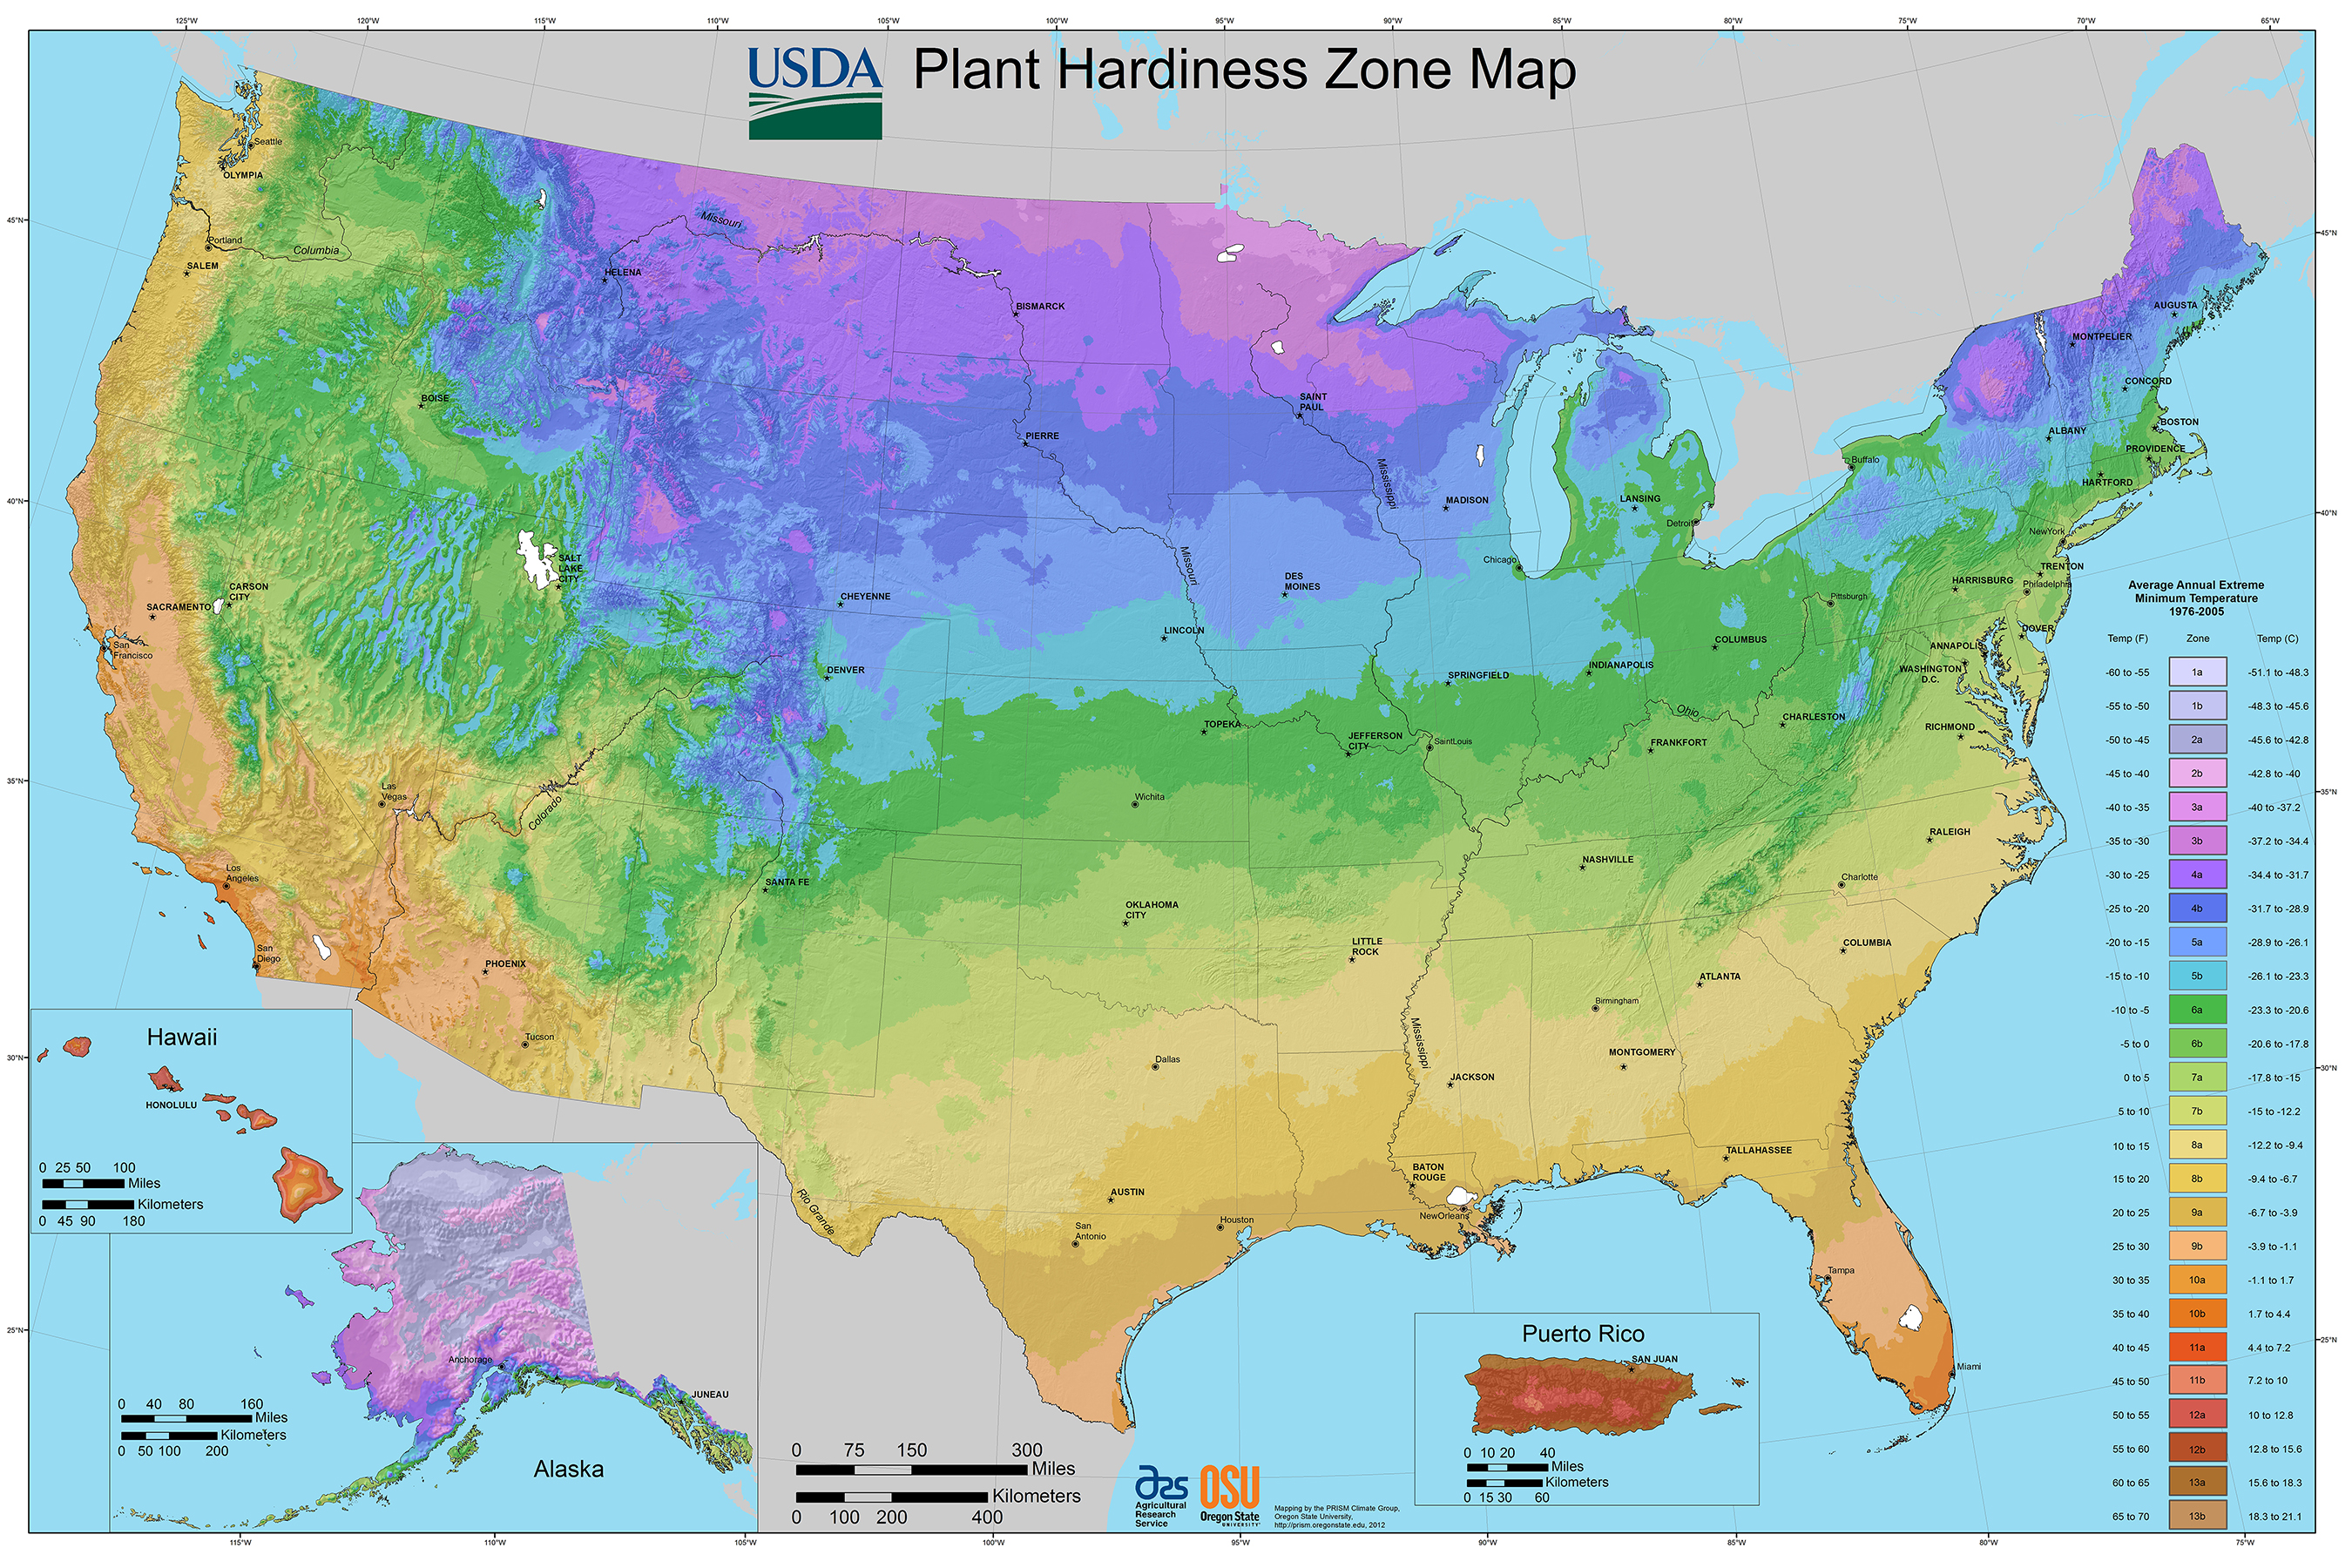 Plant Hardiness Zone Map U.S. - One Green World